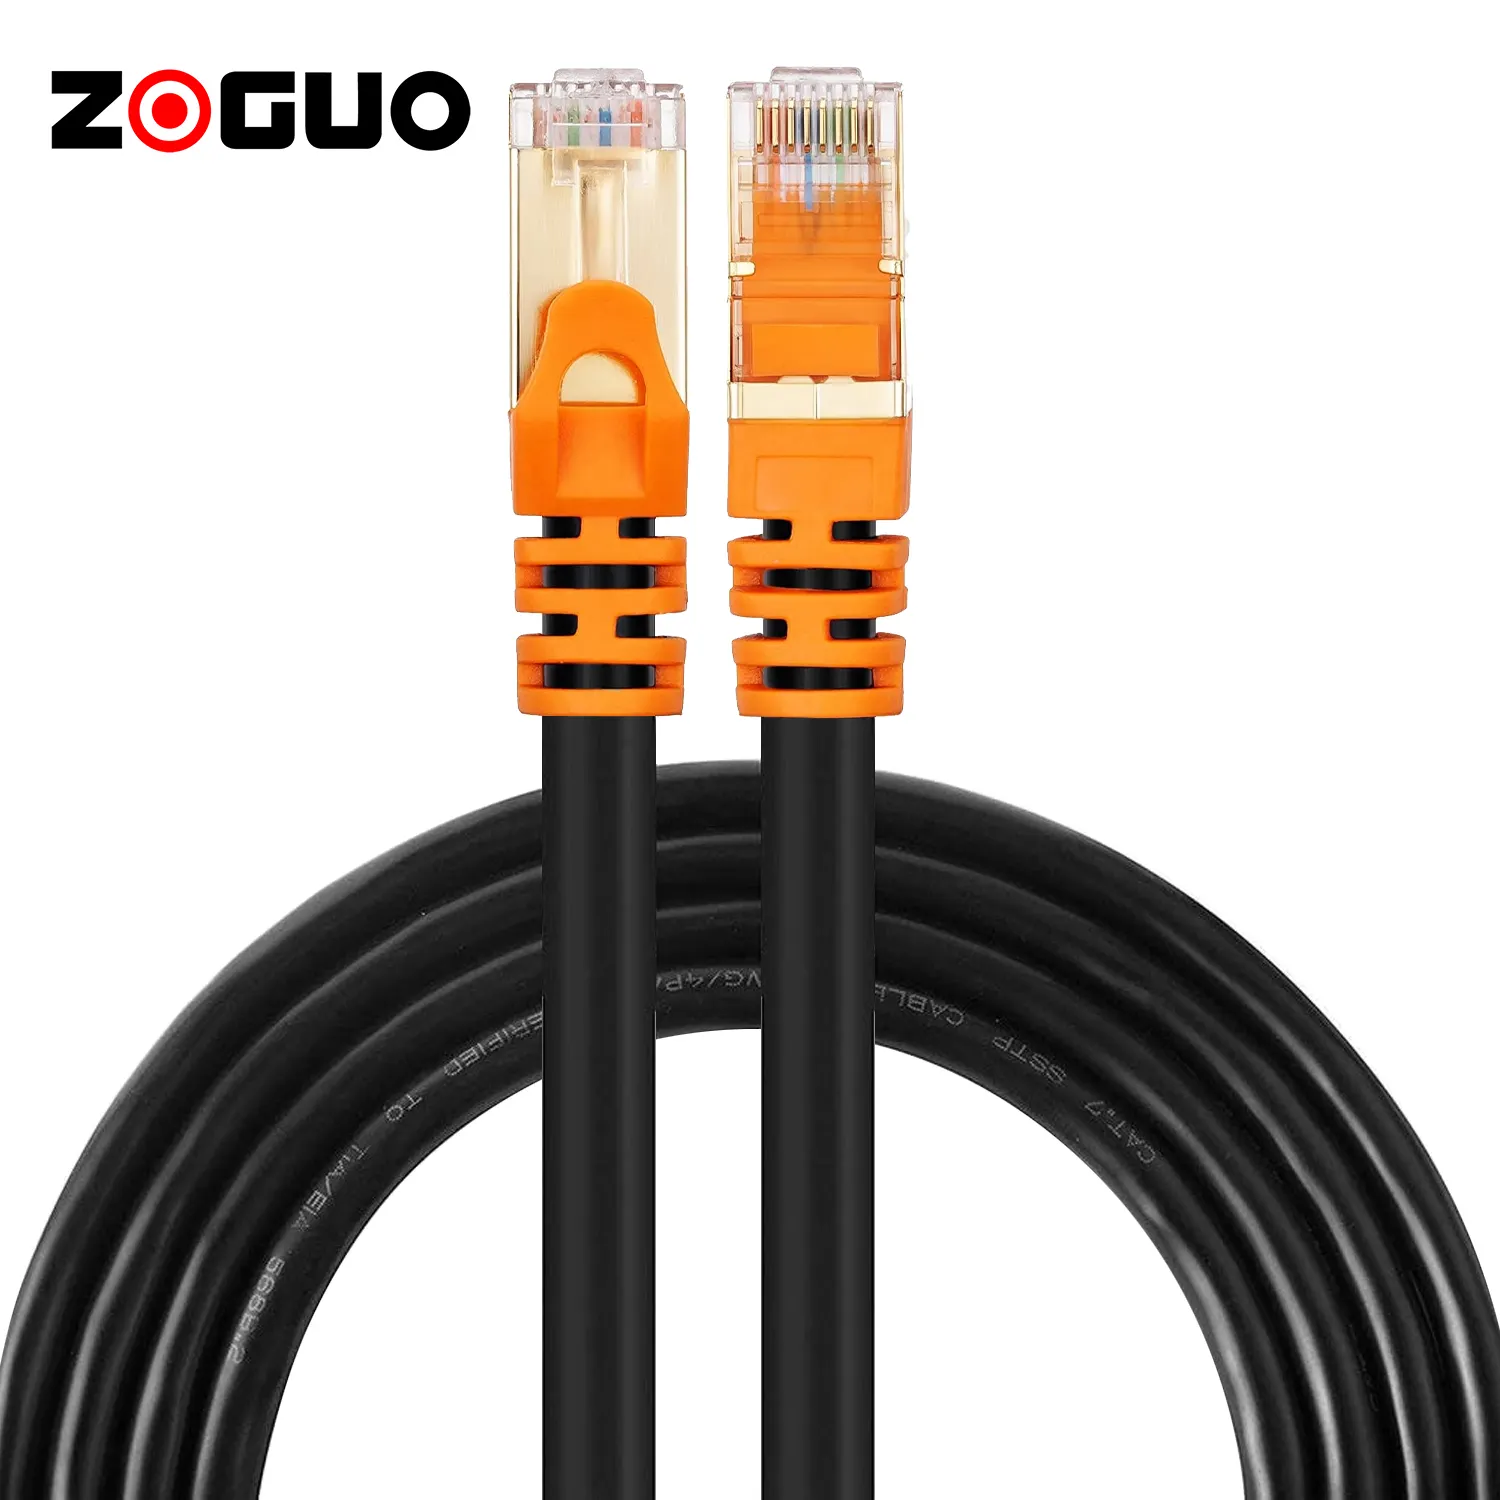 gigabit ethernet cable